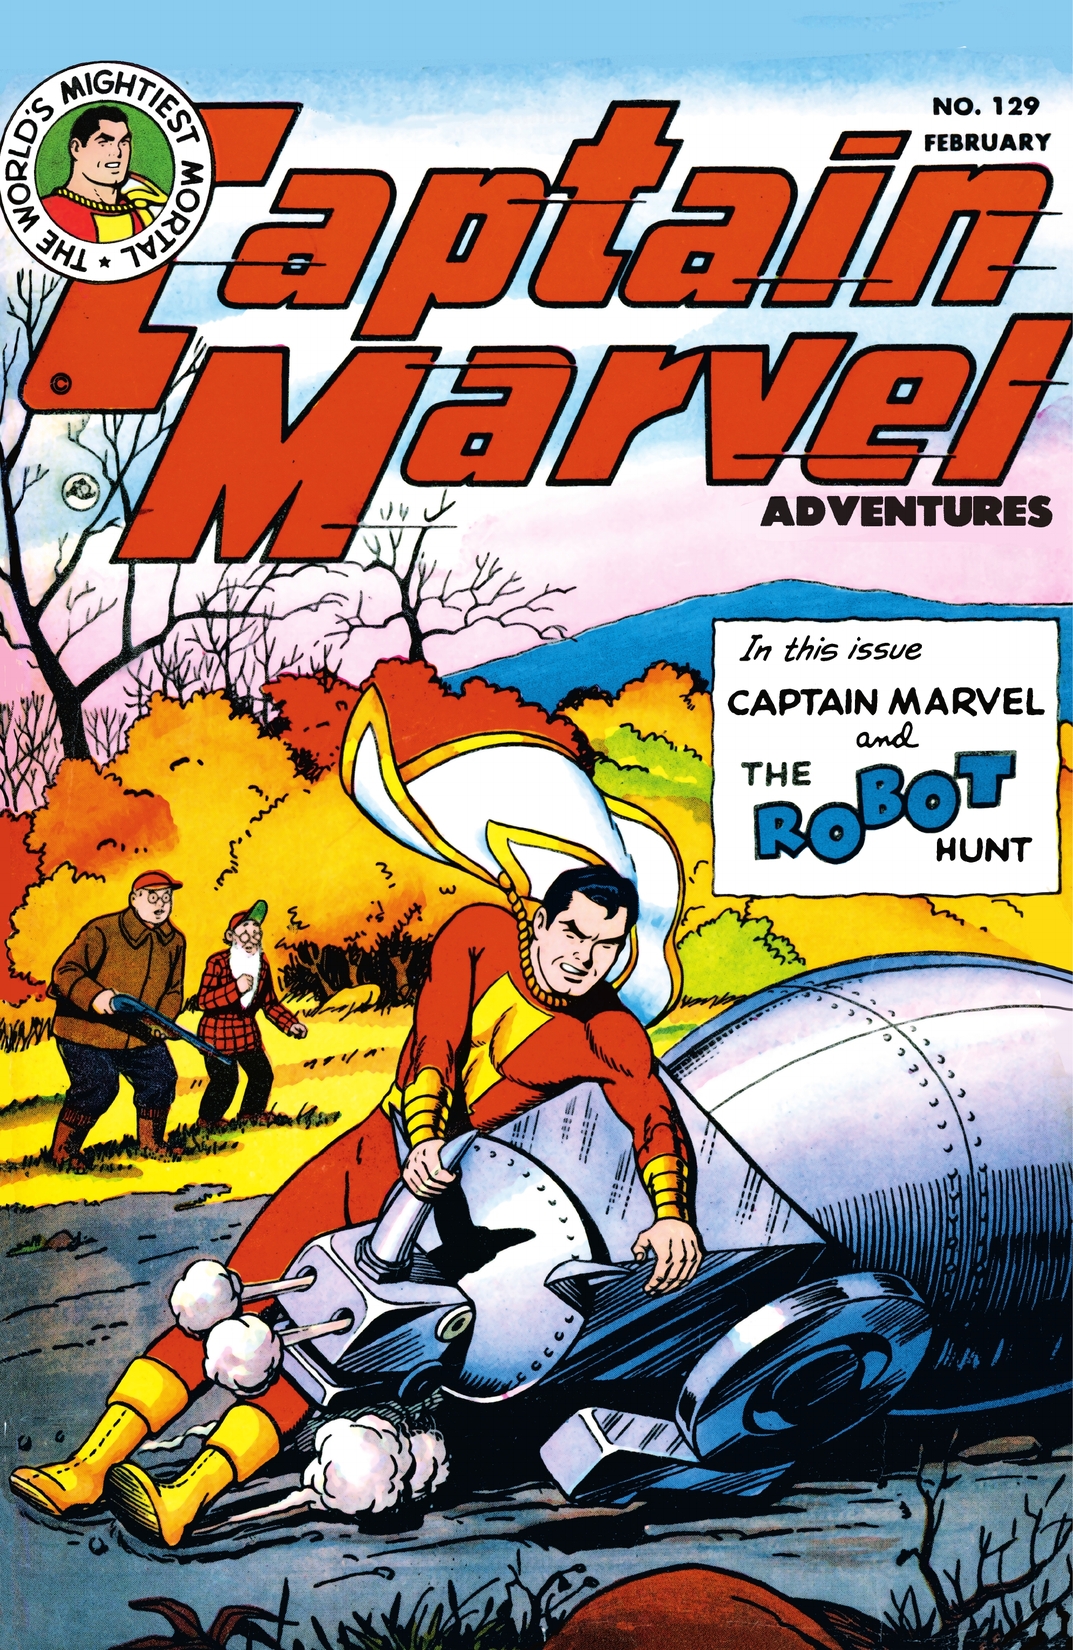 Captain Marvel Adventures #129 preview images